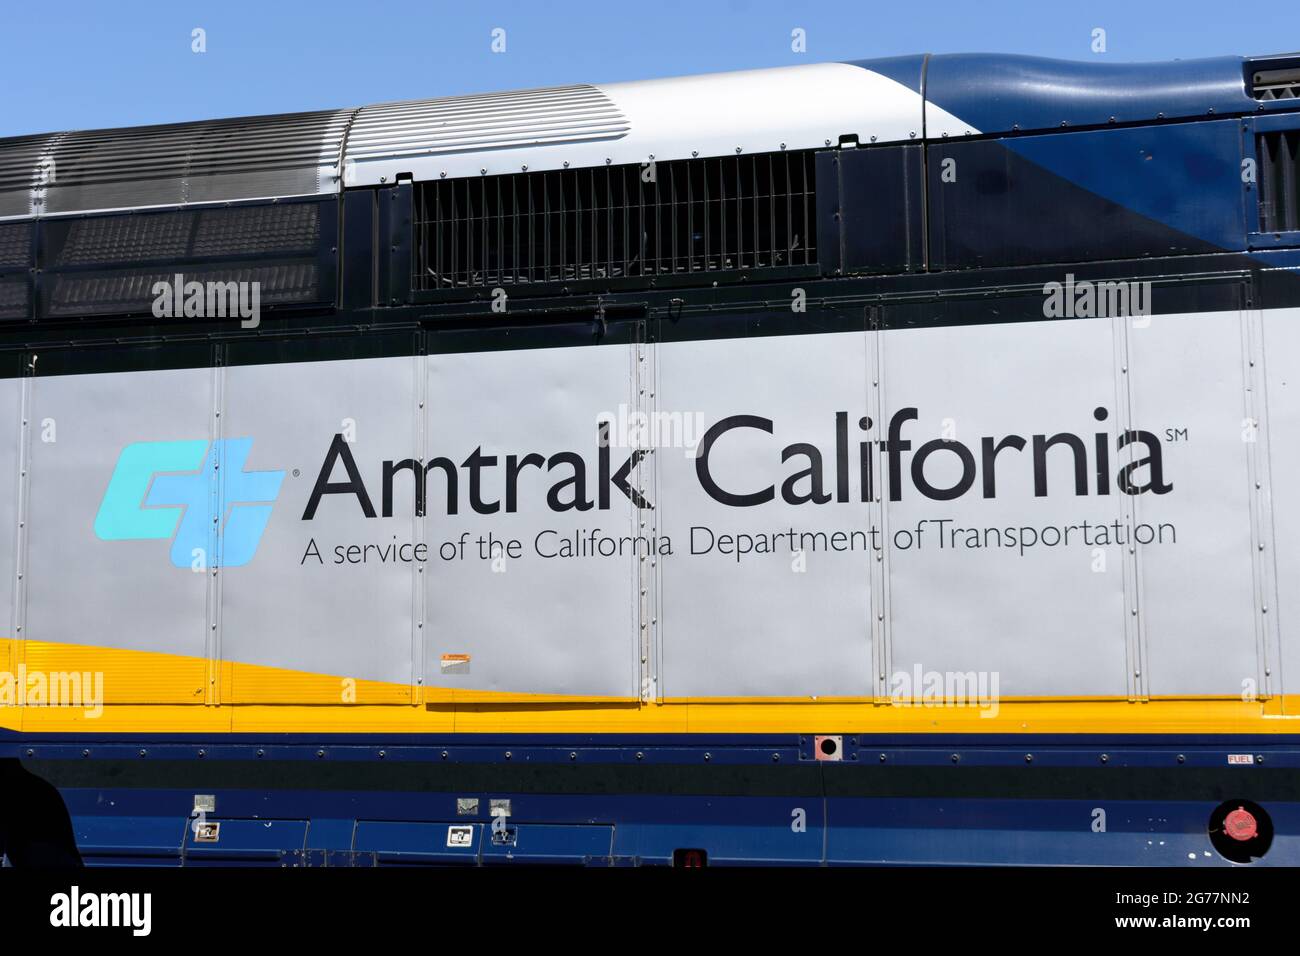 Amtrak California a service of the California Department of Transportation sign on diesel passenger locomotive. - San Jose, California, USA - 2021 Stock Photo